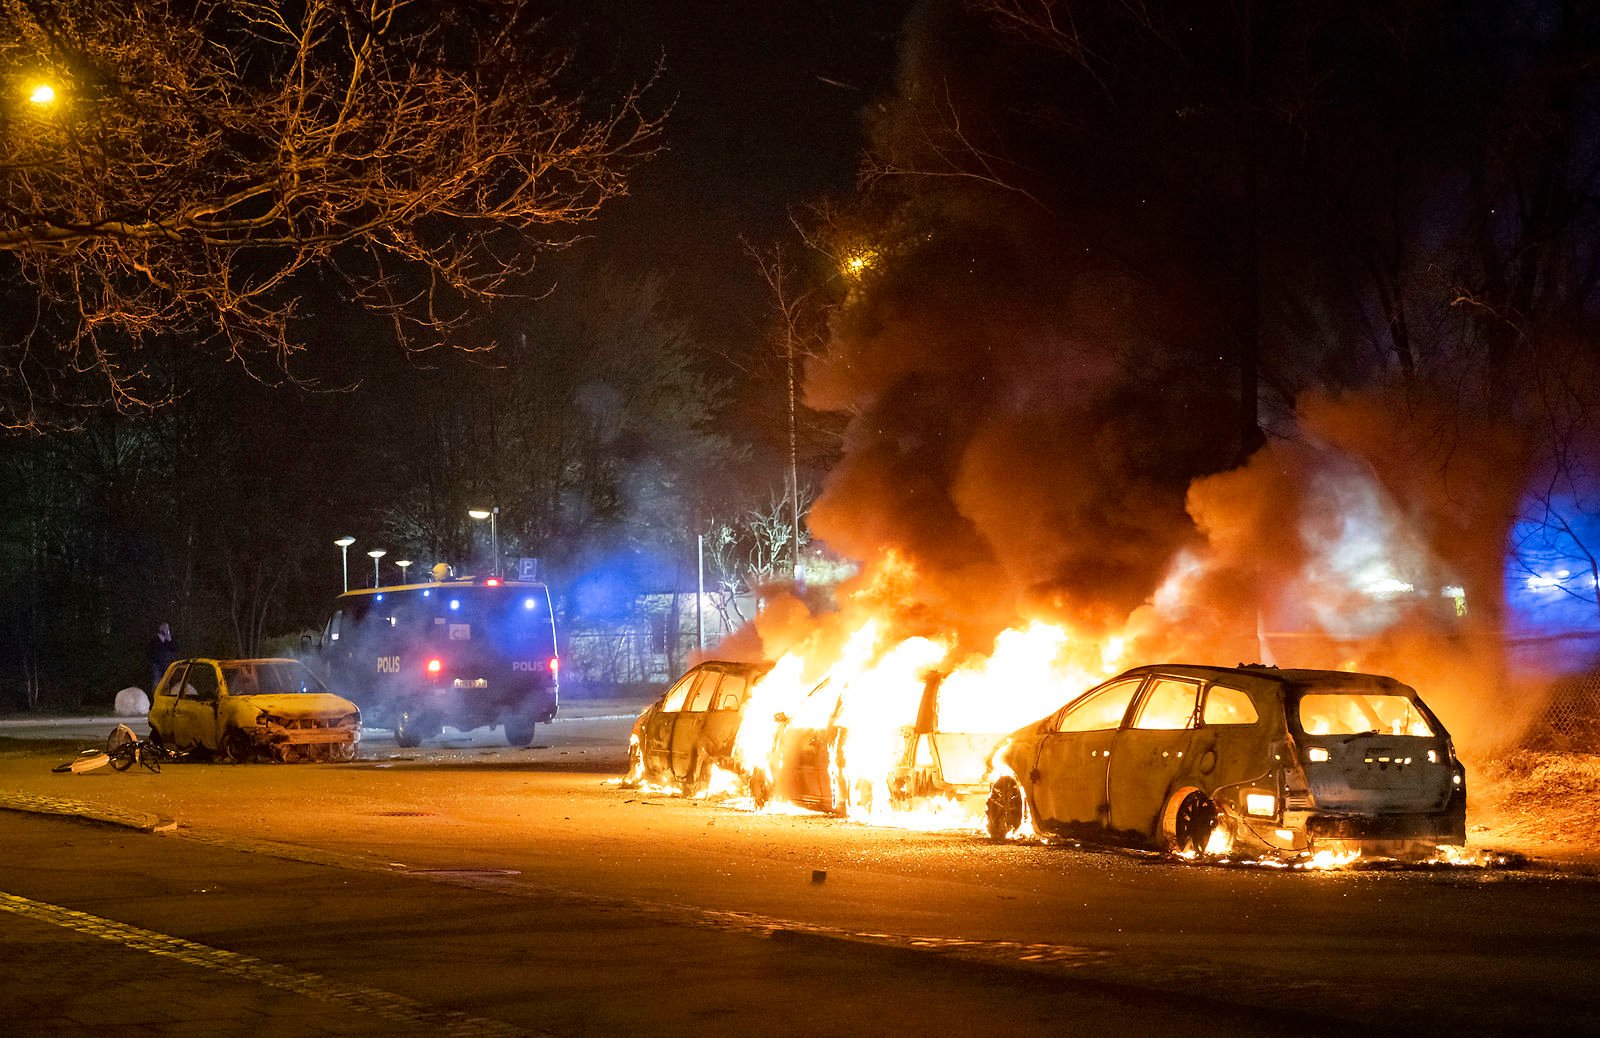 Cars on fire in Rosengård, Malmö on Sunday night after riots..